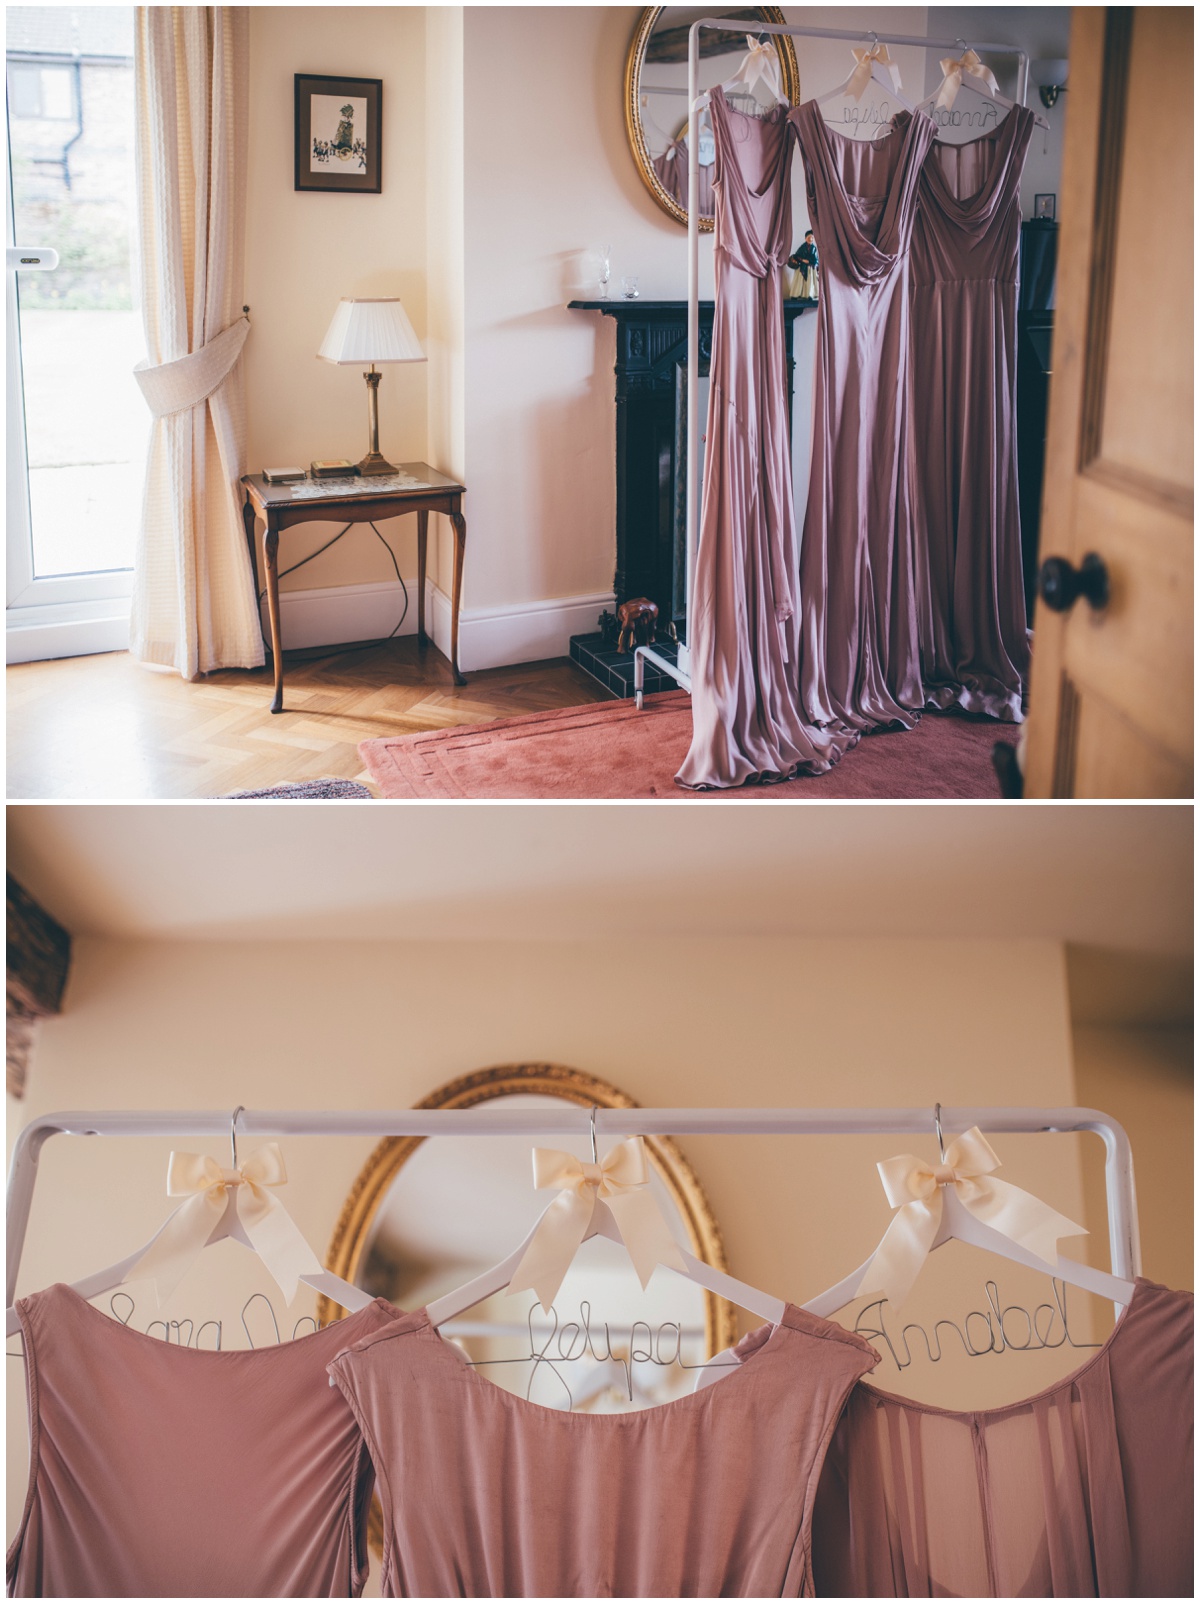 Beautiful duskiy pink bridemaid dresses with personalised hangers.